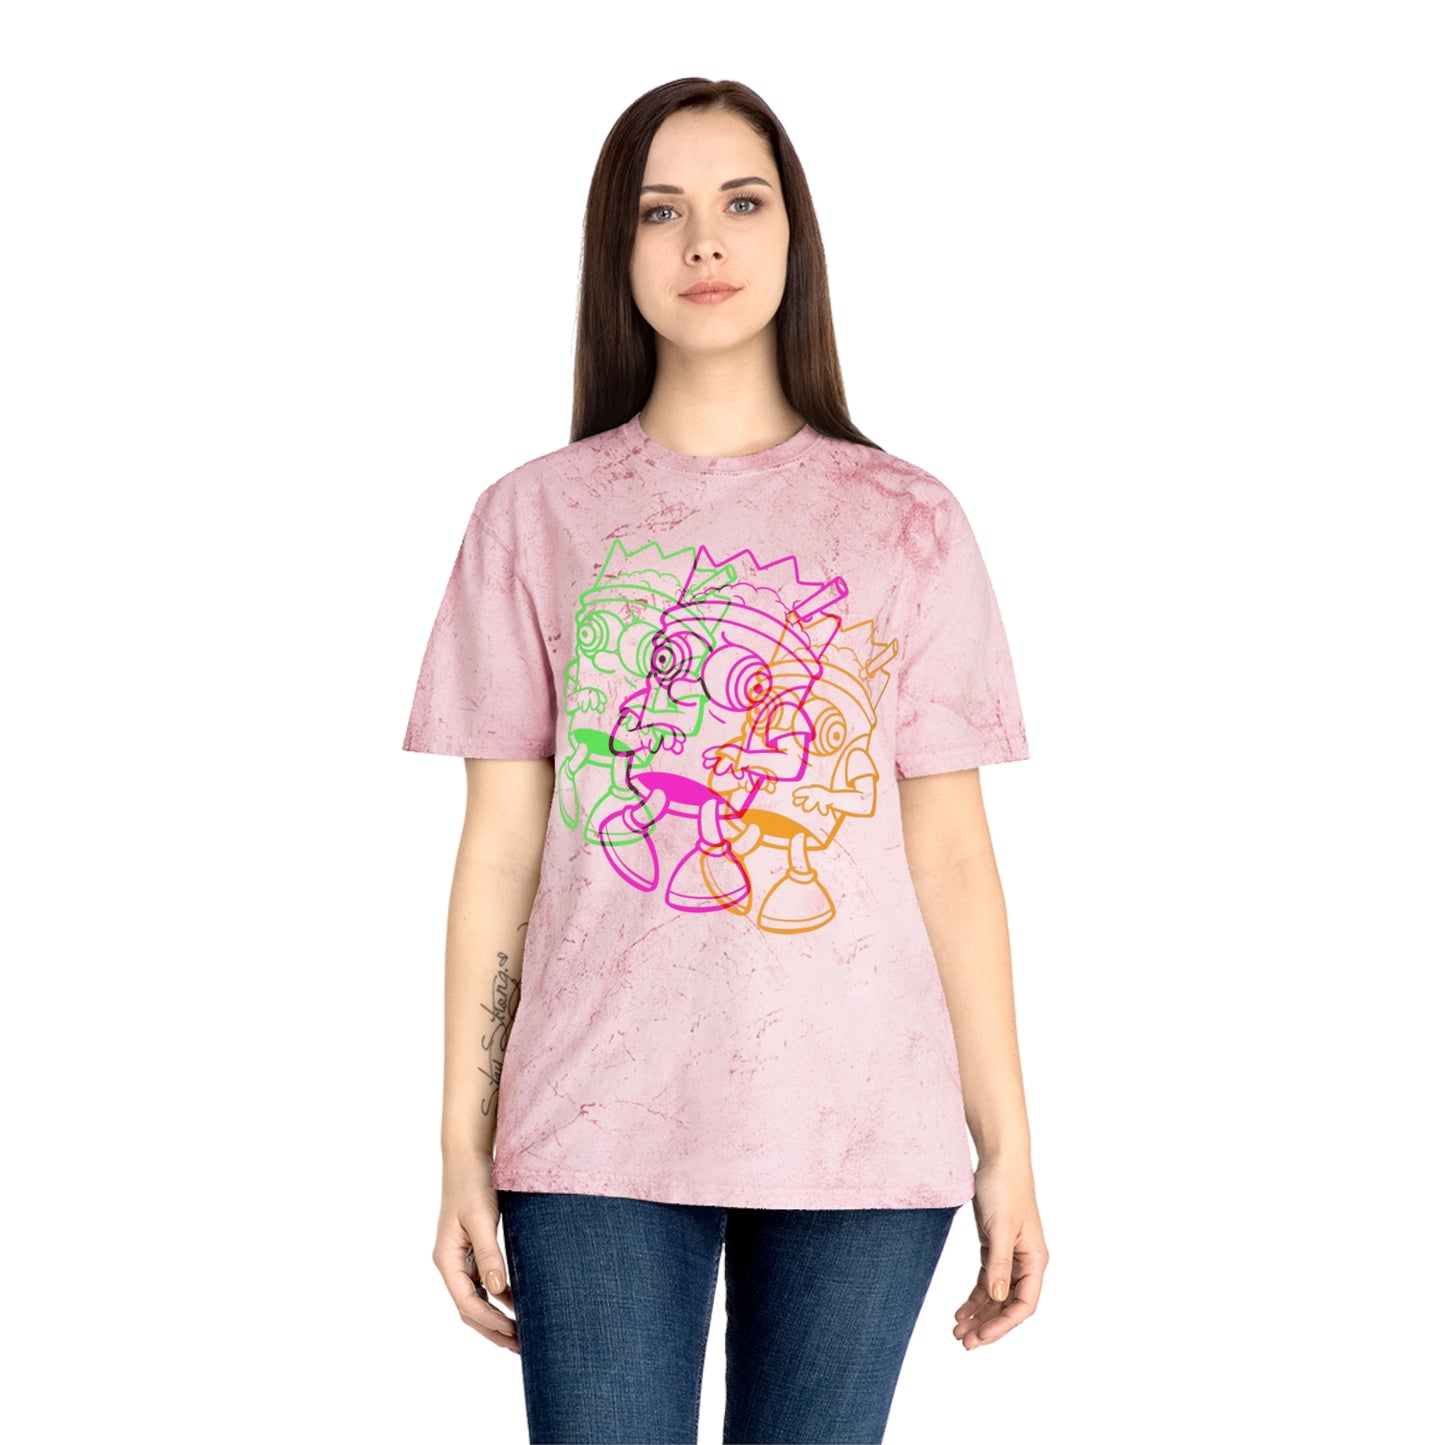 Squishee Addict color blast t-shirt